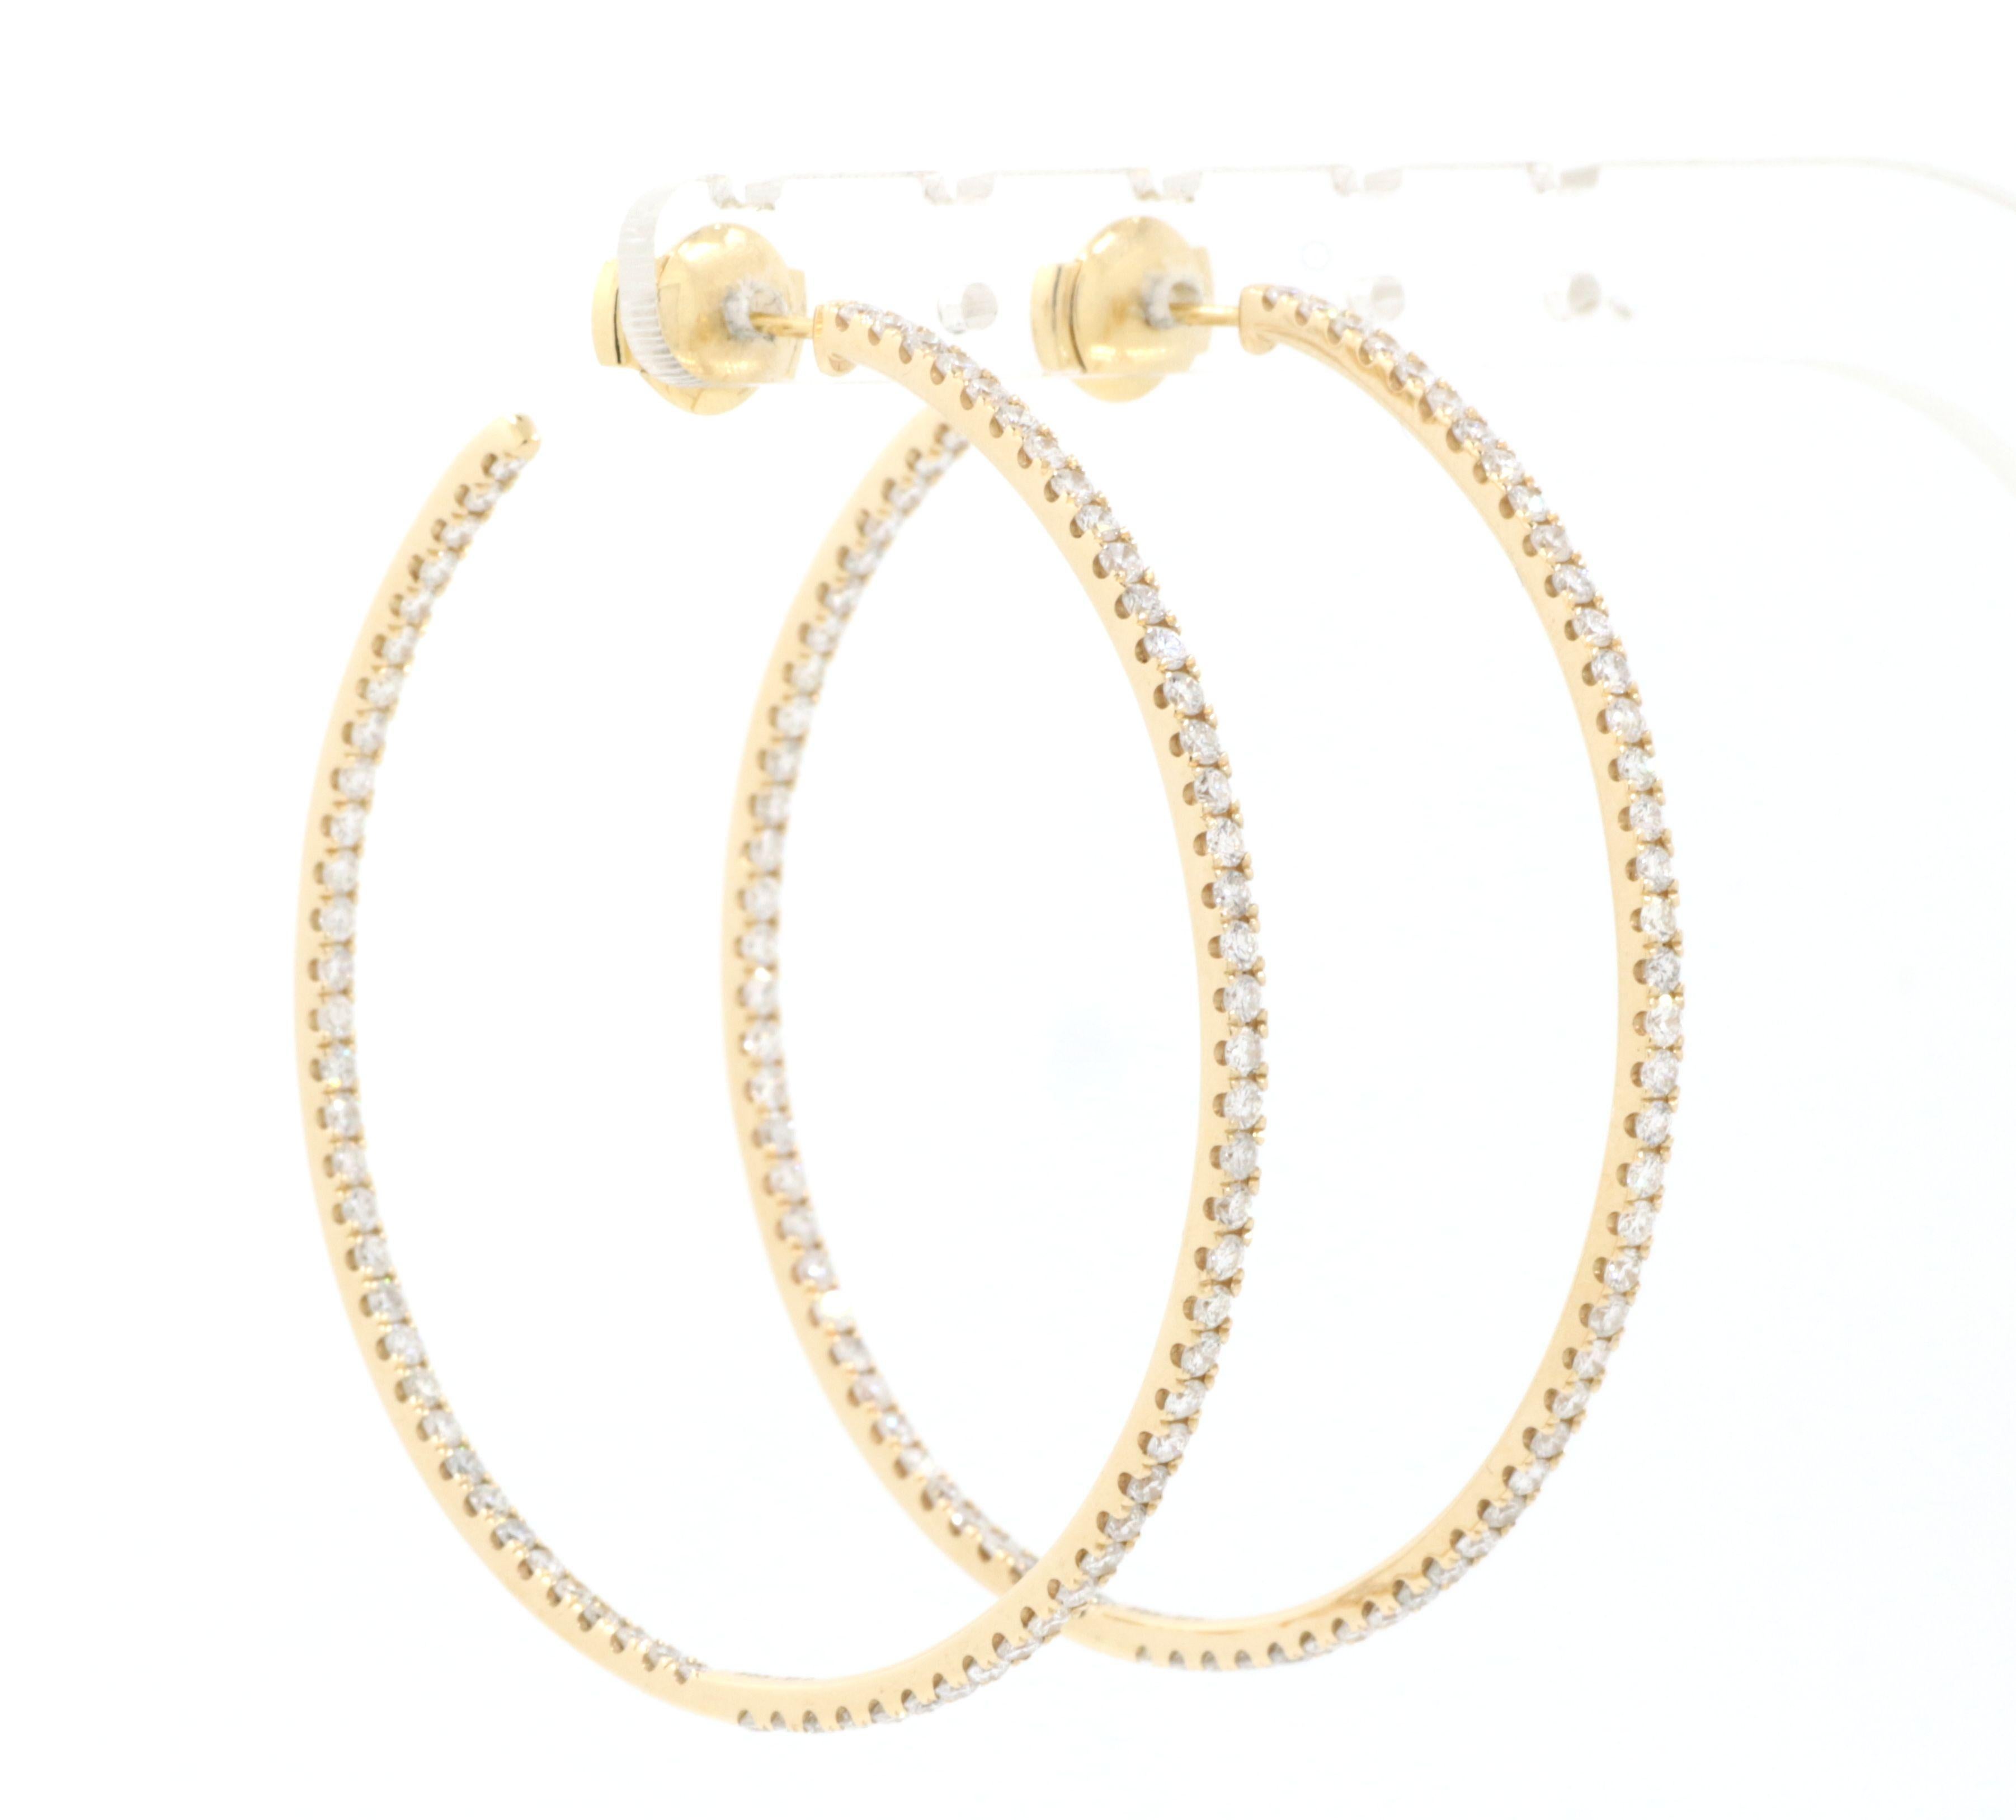 Round Cut 3.4 Carat Diamond Hoop Earrings in 18 Karat Yellow Gold